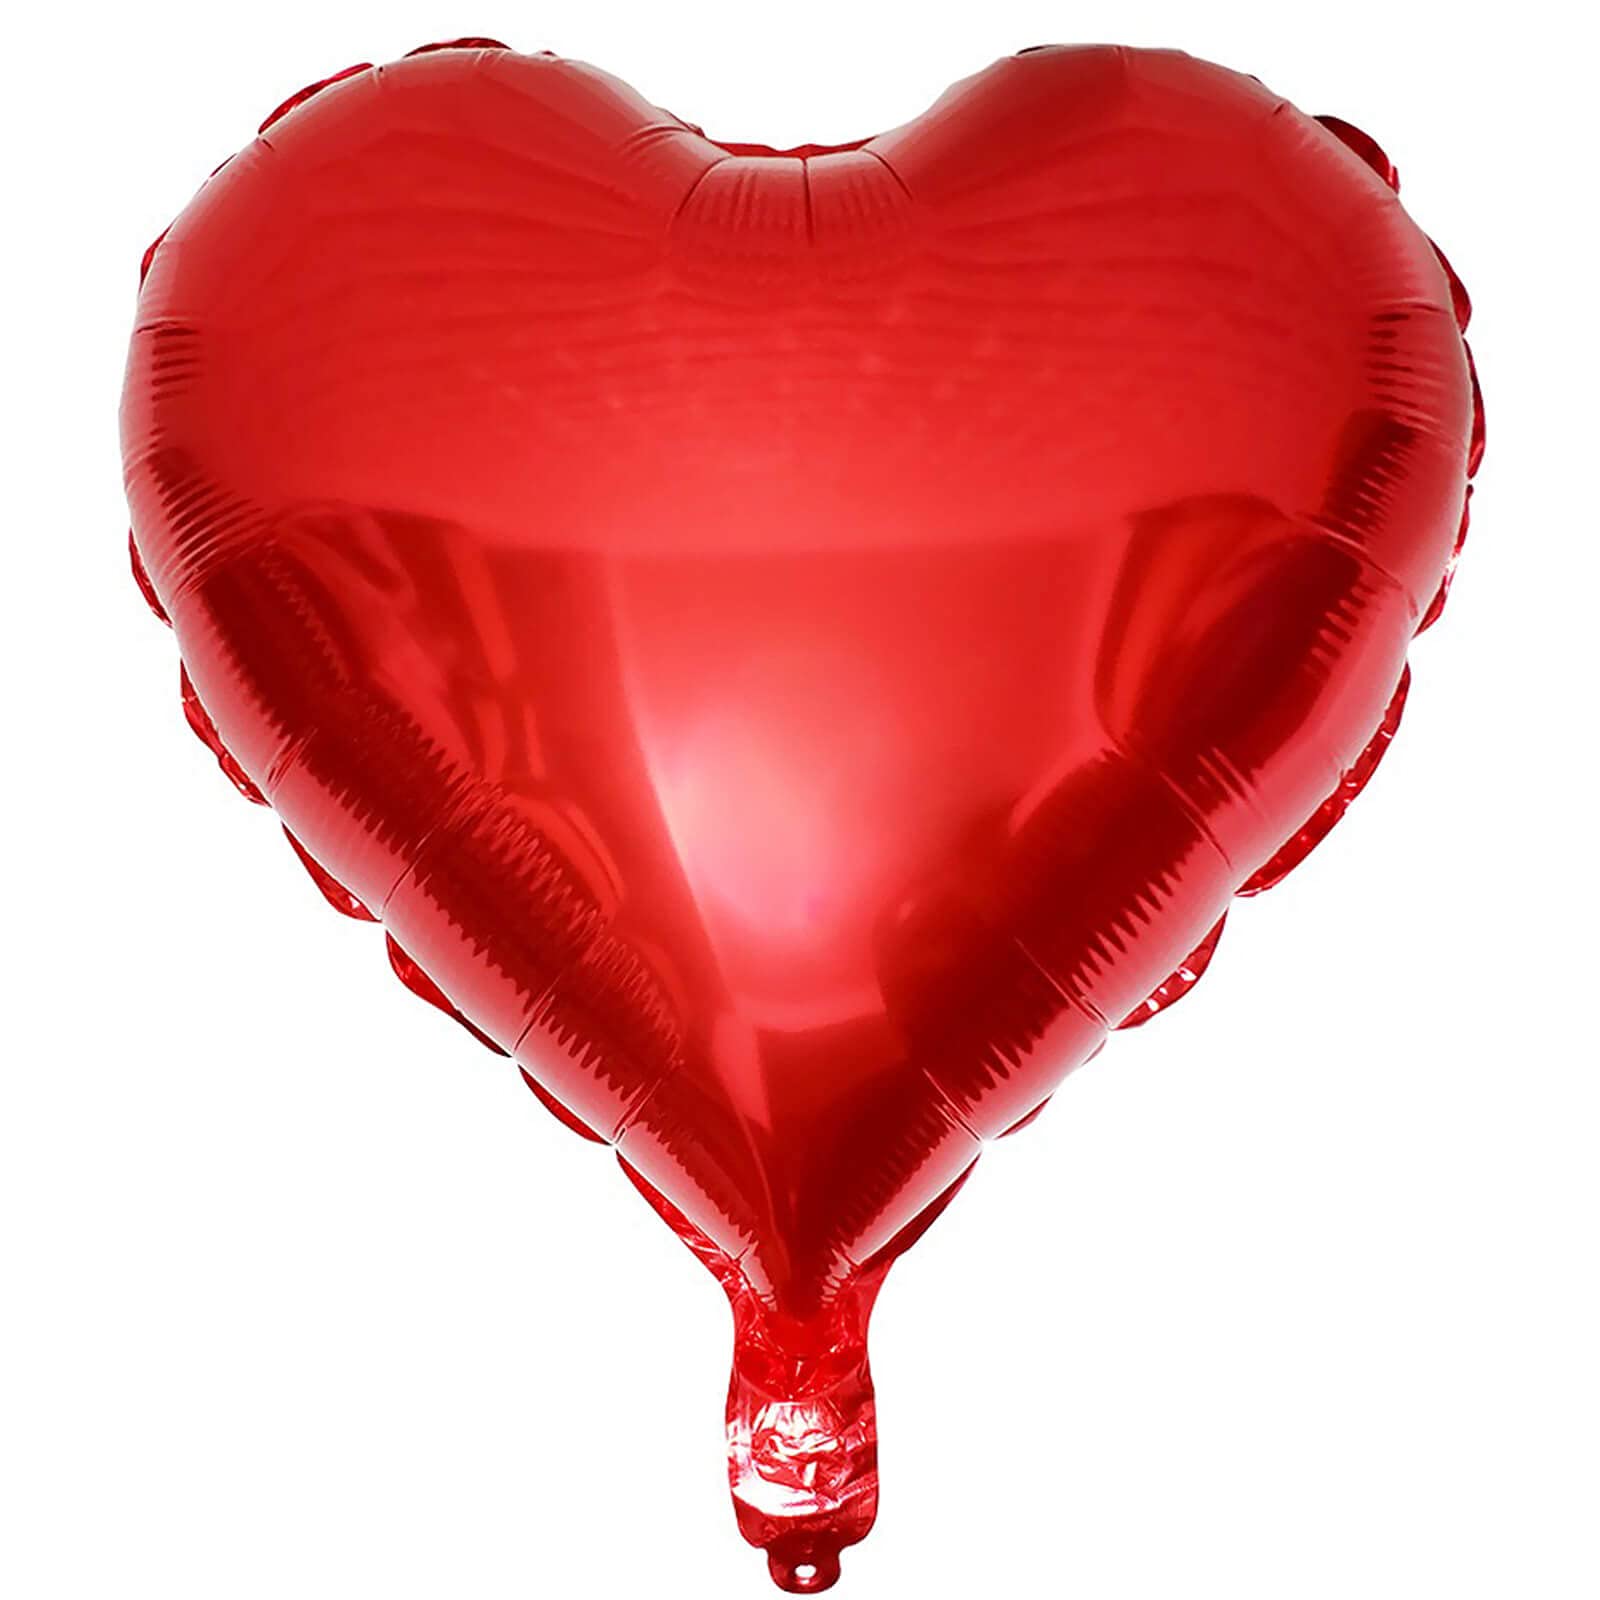 A heart-shaped balloon.